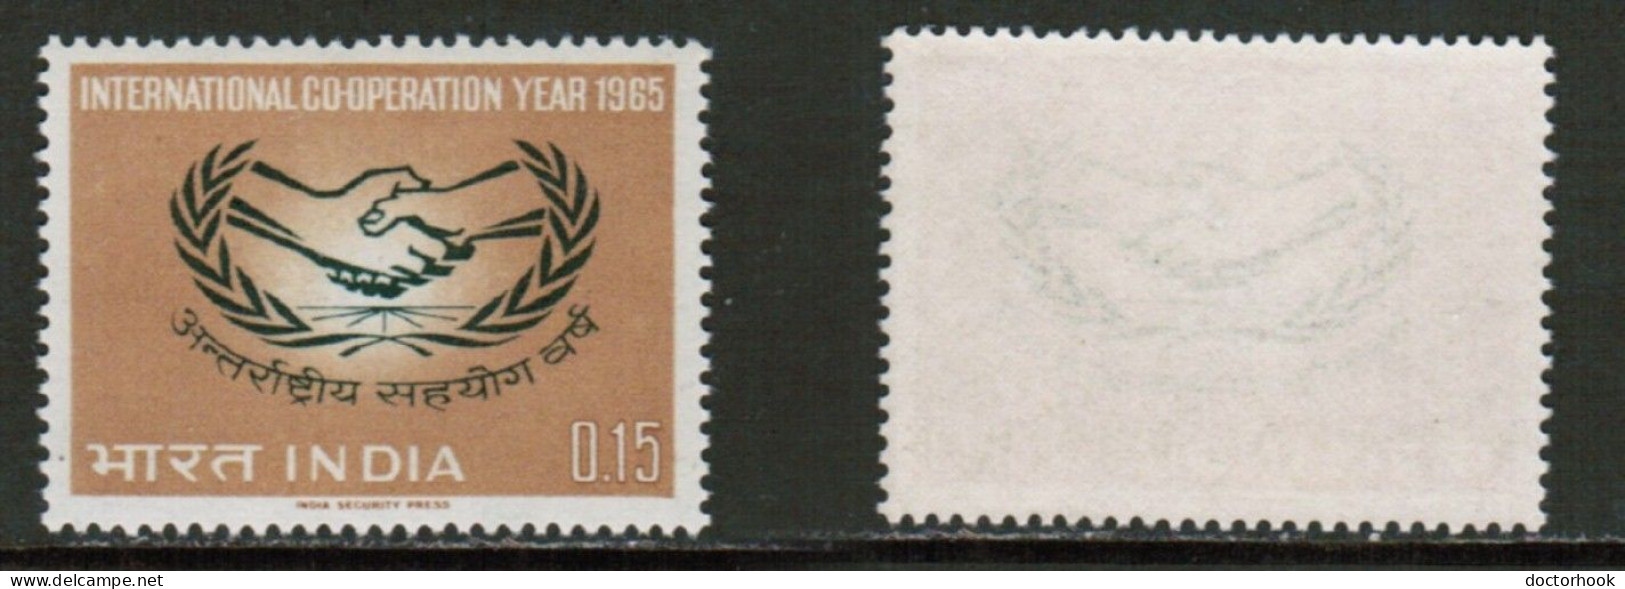 INDIA   Scott # 403** MINT NH (CONDITION AS PER SCAN) (Stamp Scan # 919-6) - Ongebruikt